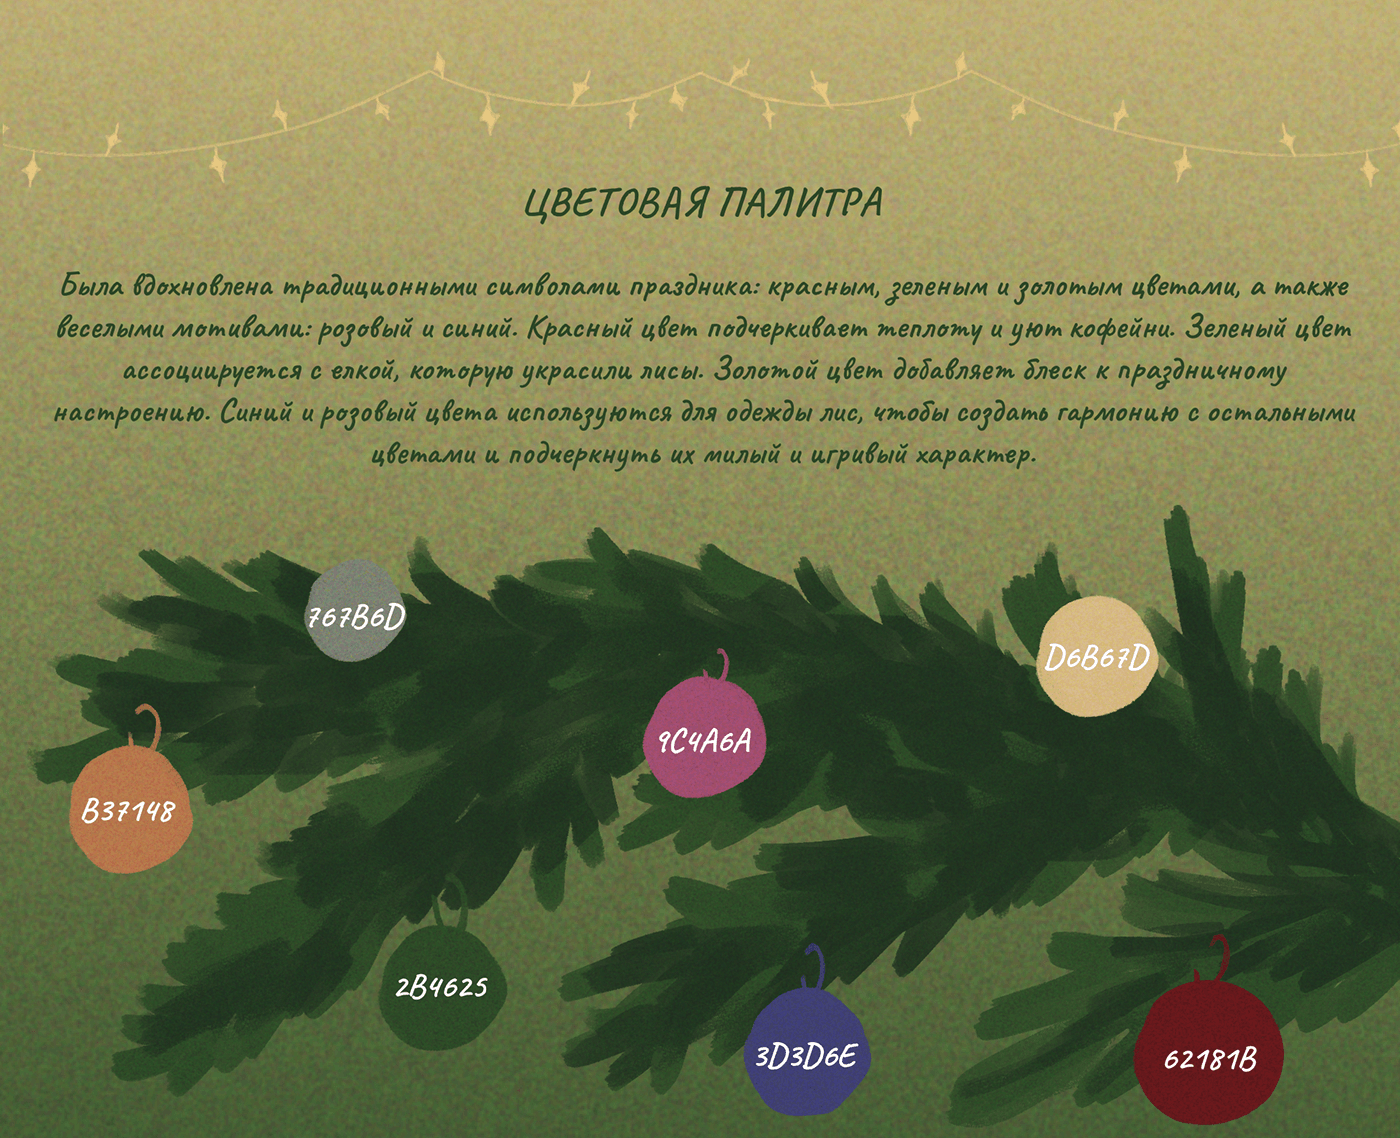 design иллюстрация Packaging coffe cup digital illustration christmas Tree new year xmas Merry Christmas